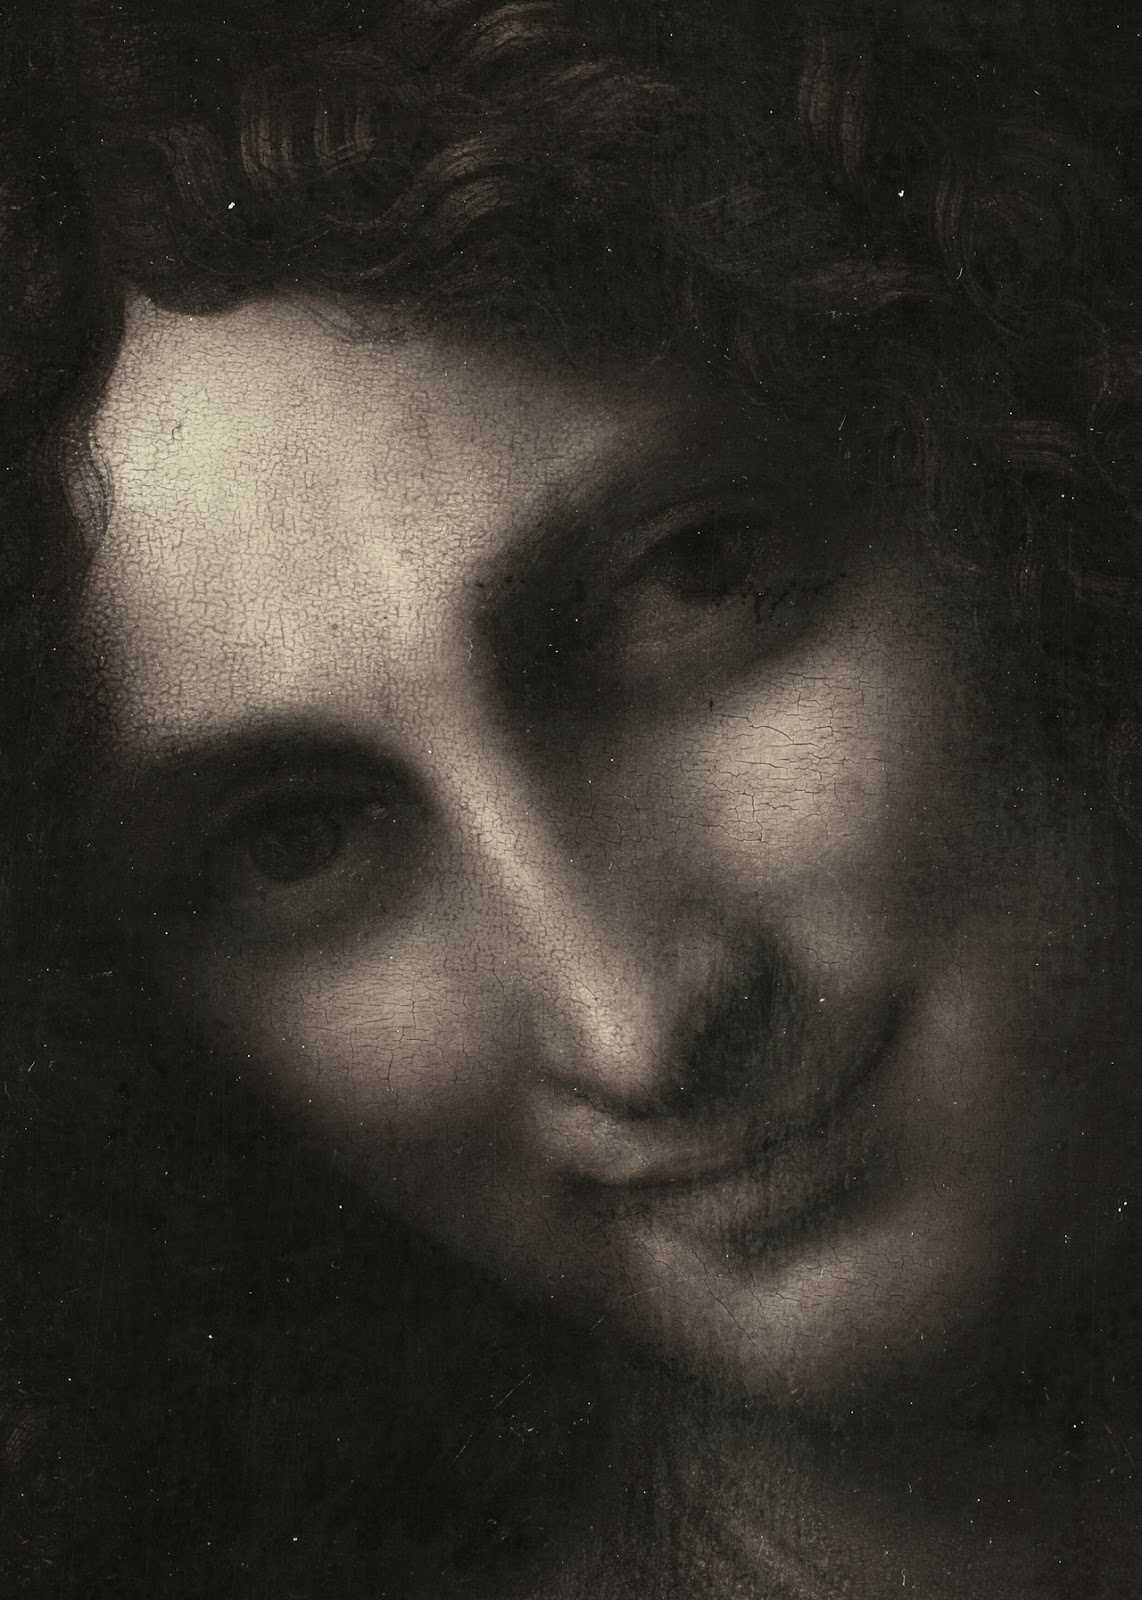 Leonardo+da+Vinci-1452-1519 (874).jpg